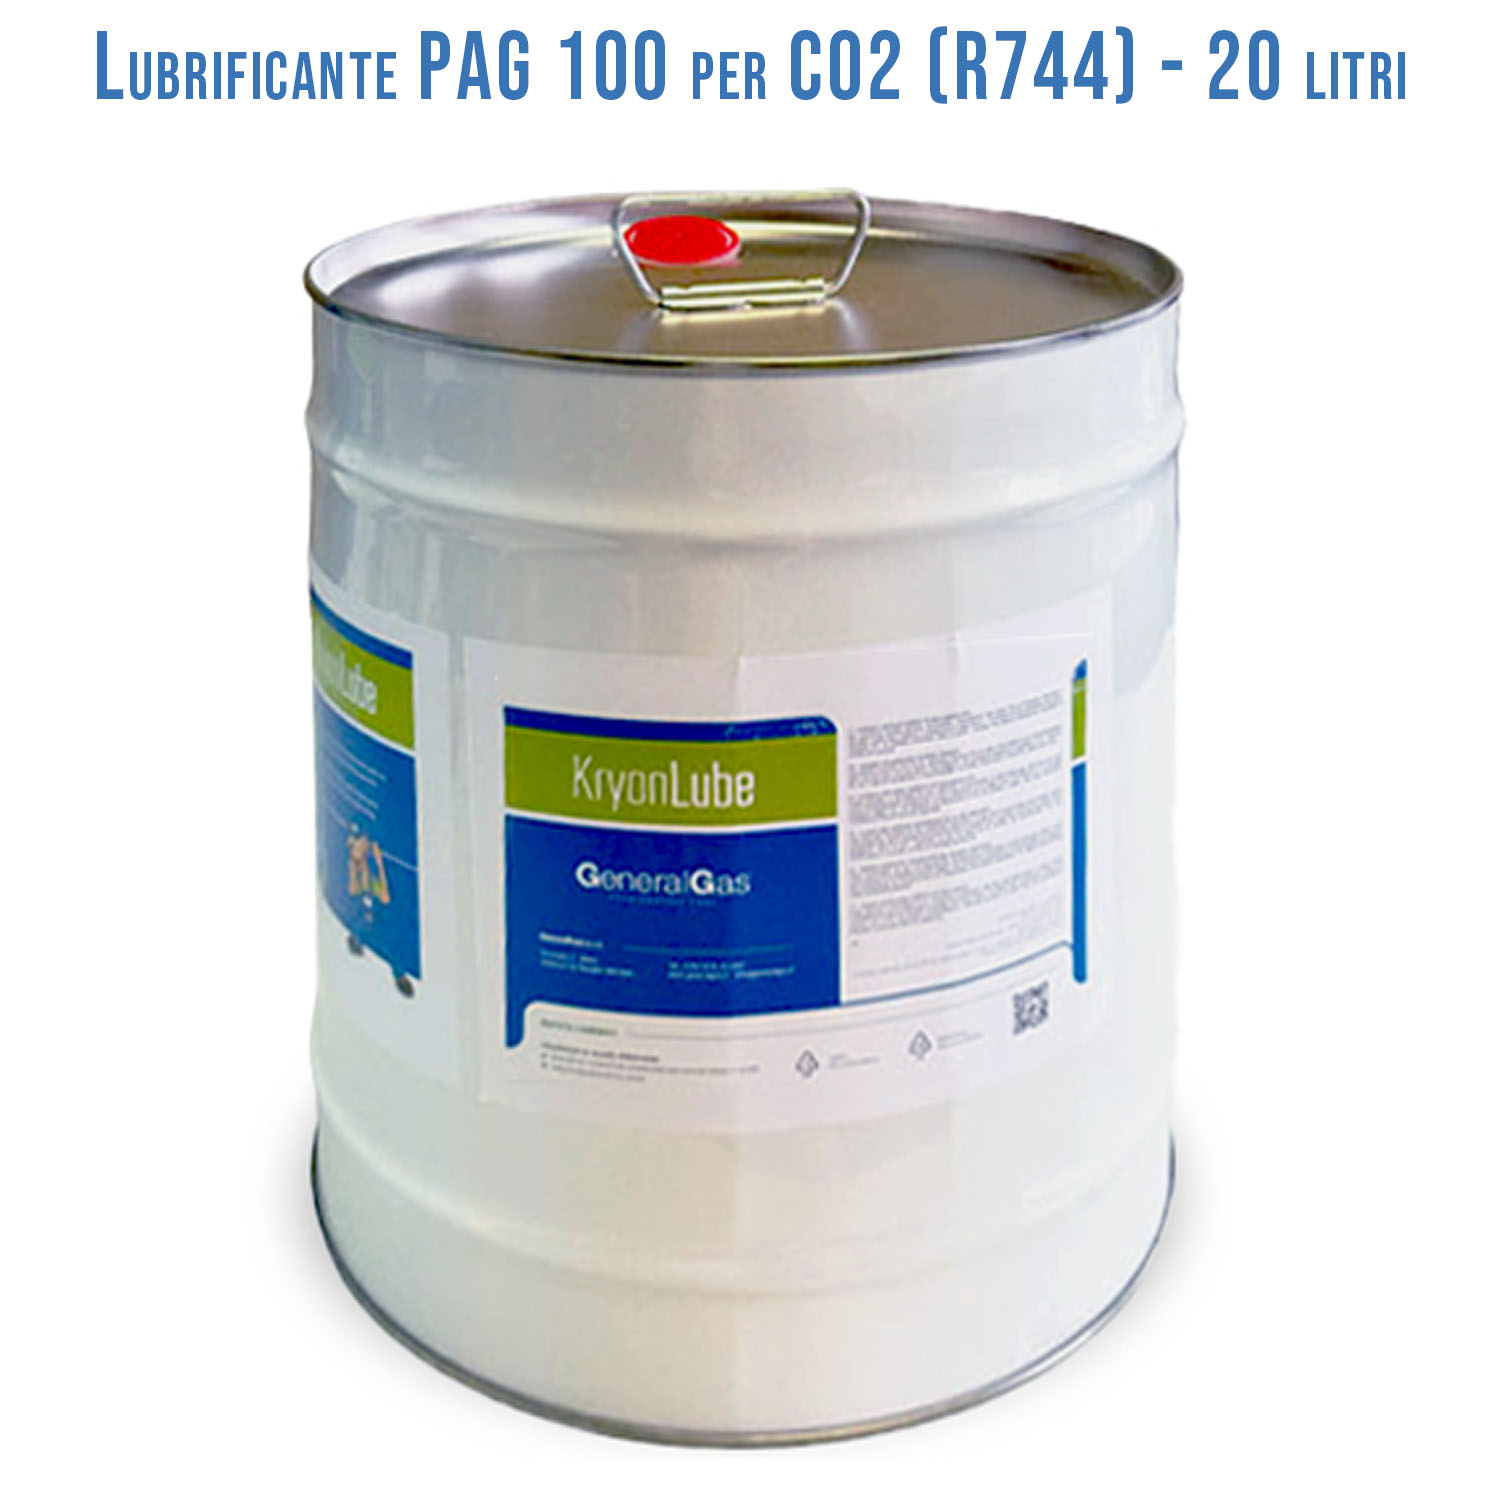 HVACR Lubricant KryonLube PAG 100 CO2 -  Polyalkylene Glycol - metal canister 20 lt.